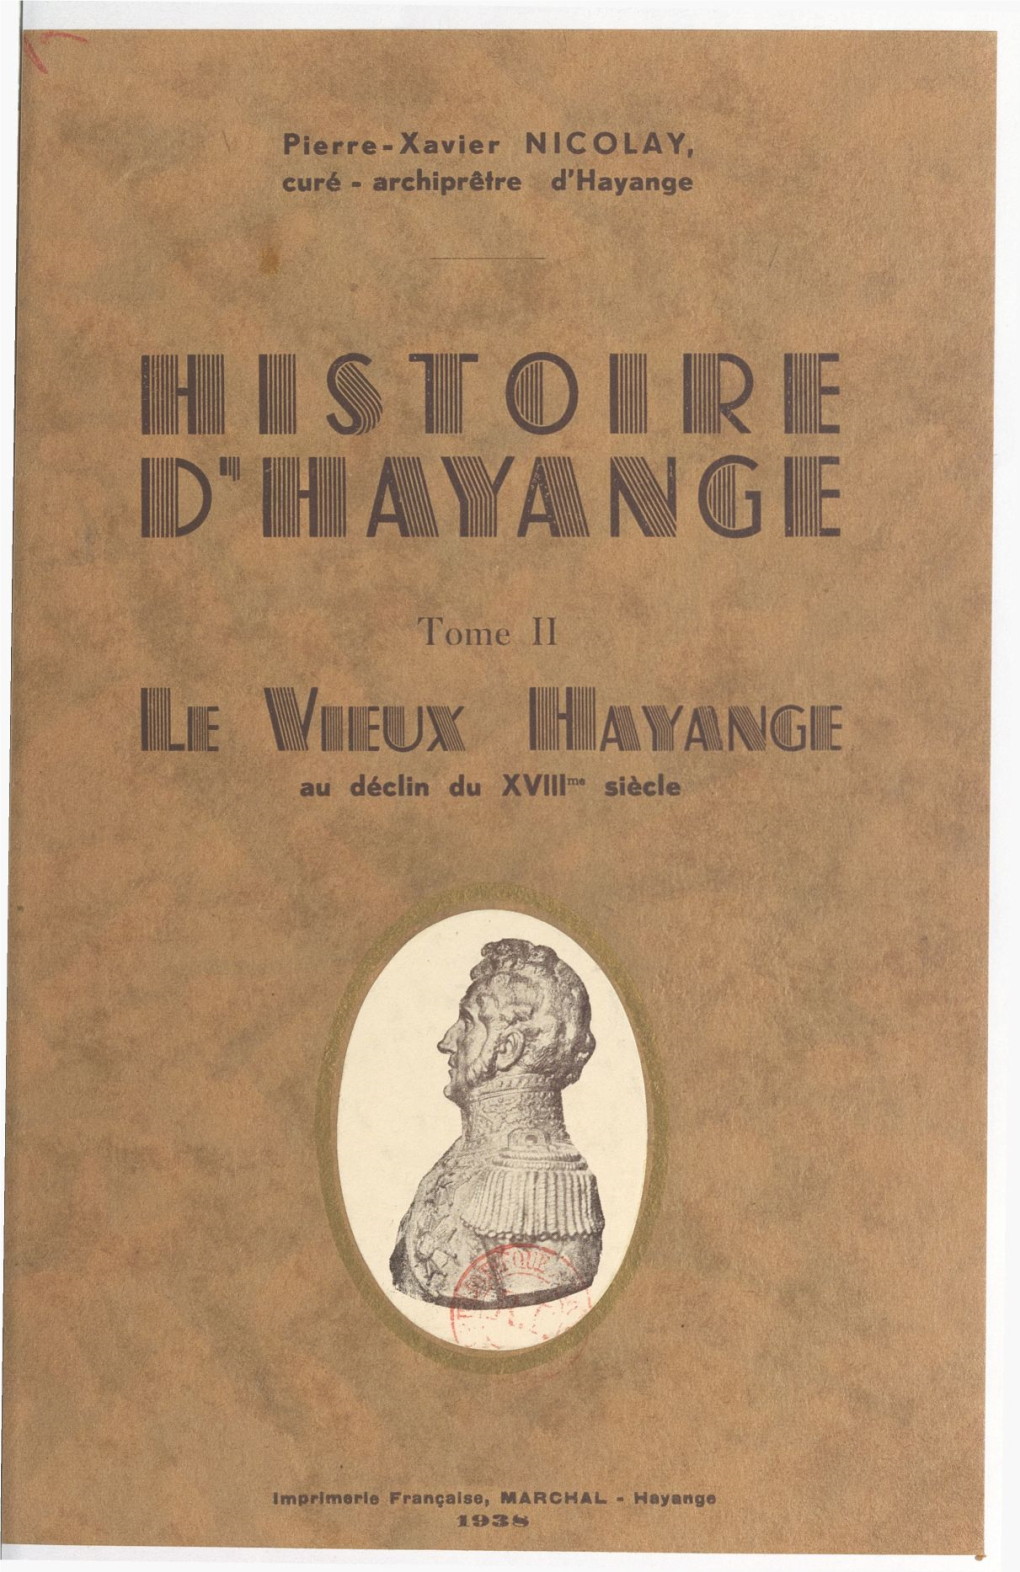 Histoire D'hayange (2)